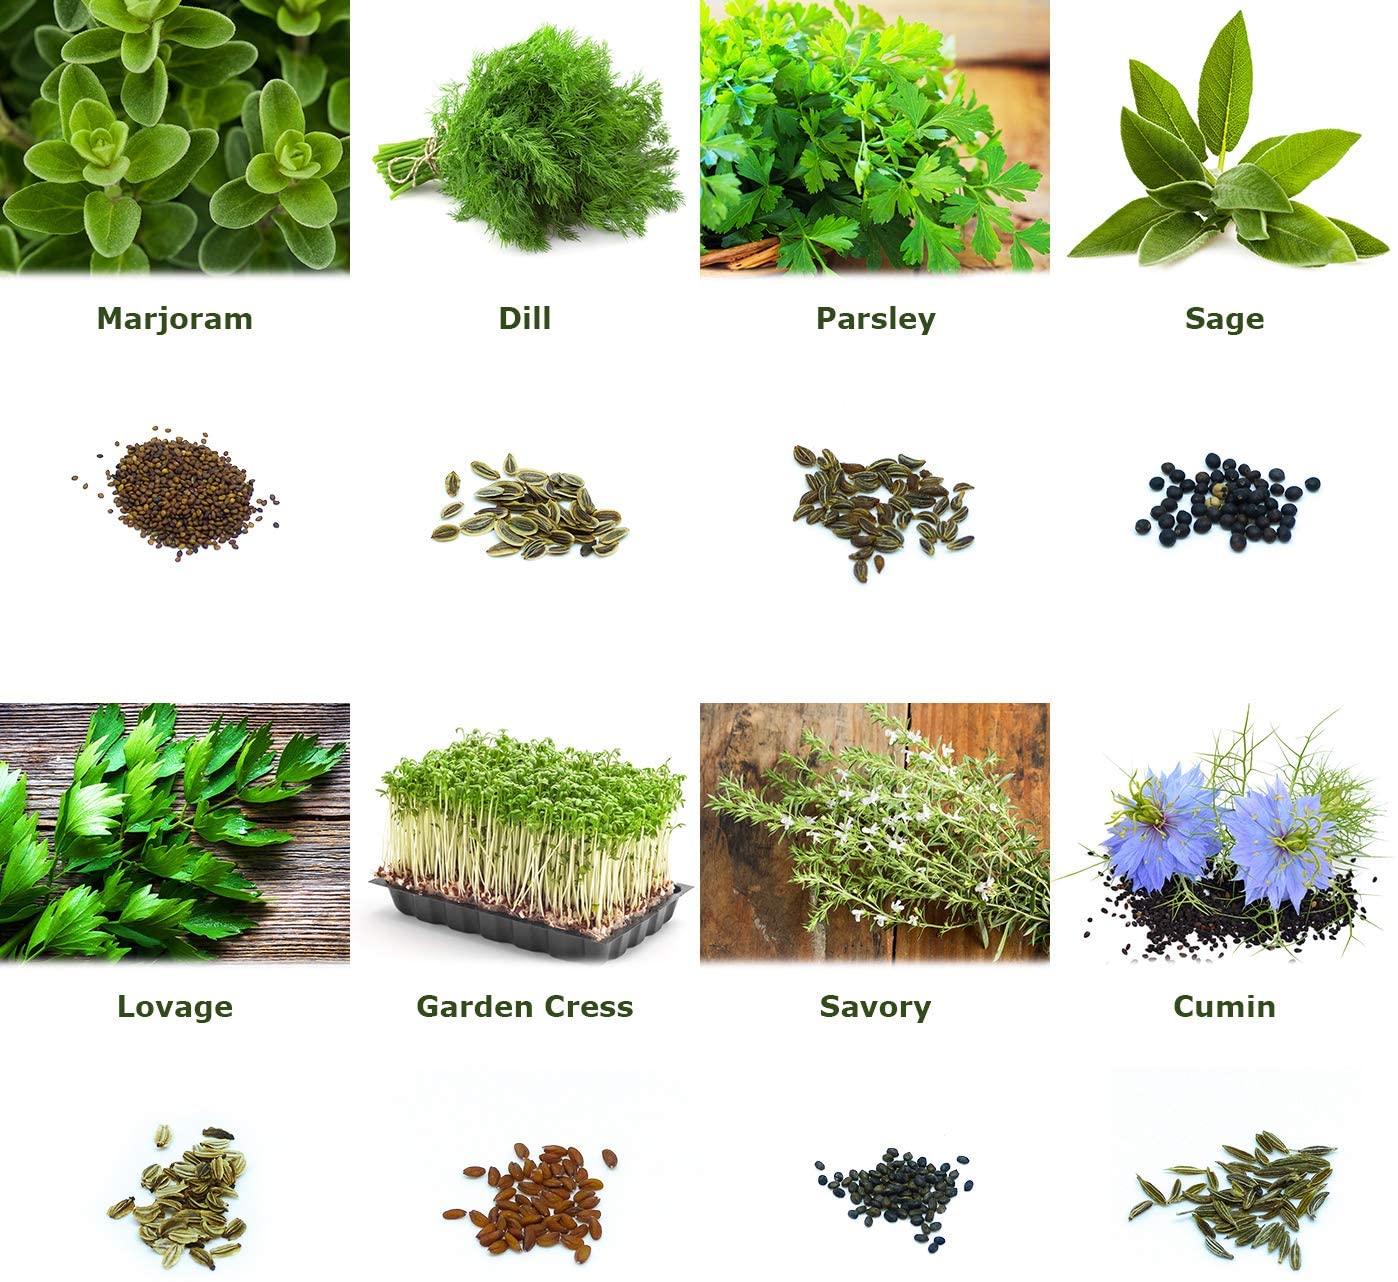 *Set 'Herb Garden' 16 x 50 Seeds of The Most Popular Herbs